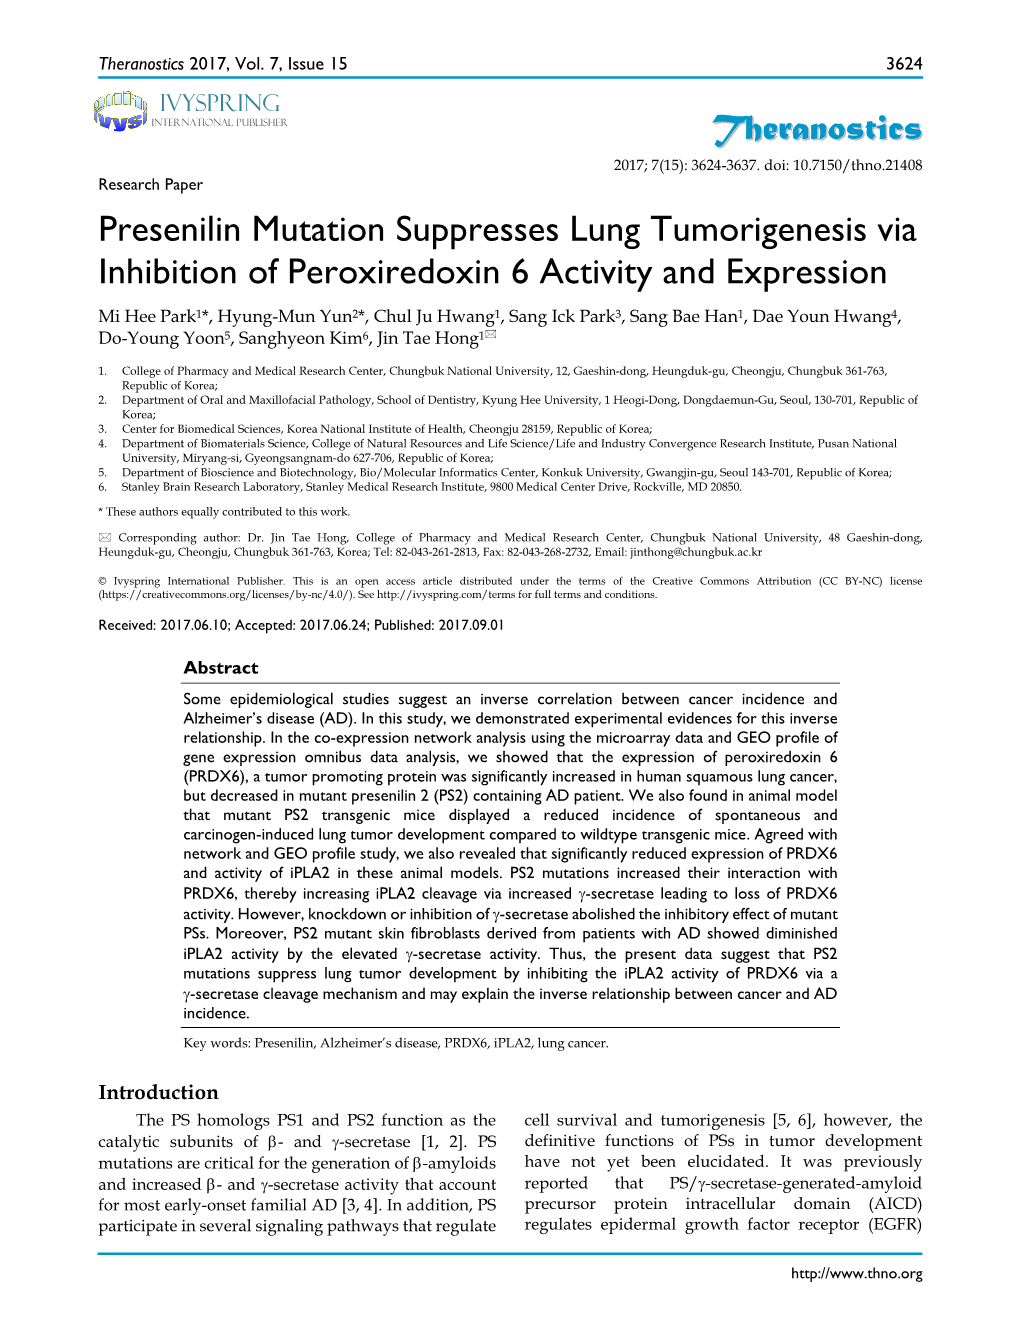 Presenilin Mutation Suppresses Lung Tumorigenesis Via Inhibition Of